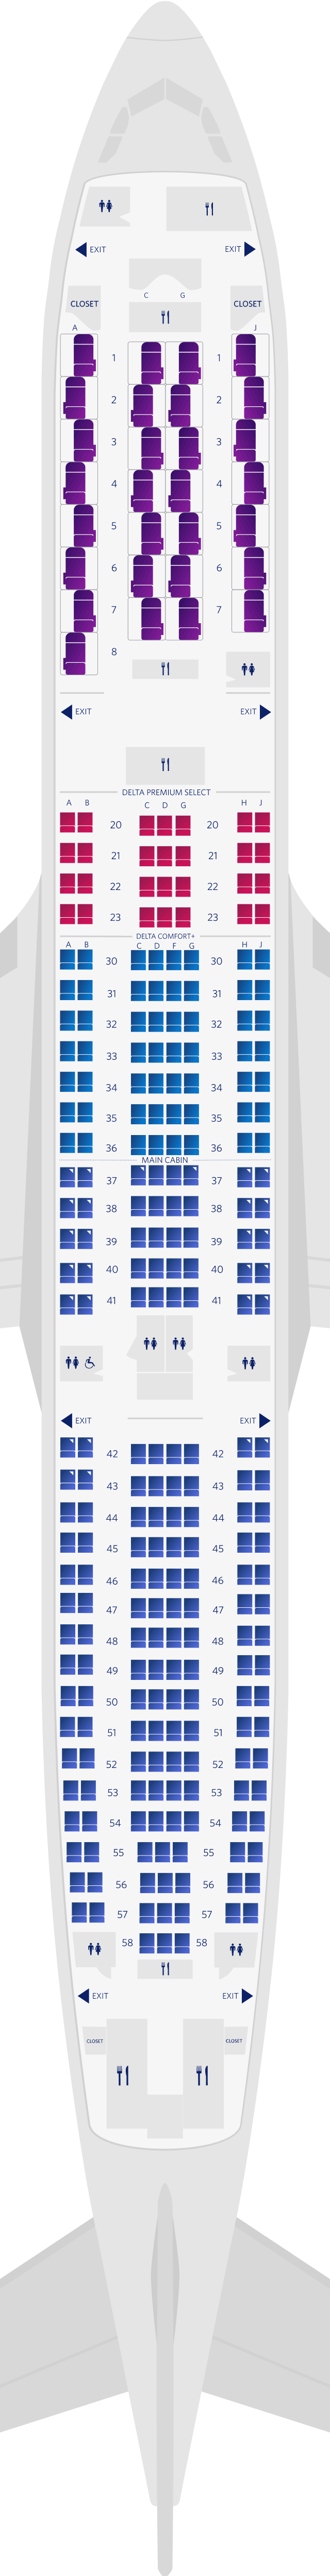 Mapa de assentos do Airbus A330-900neo